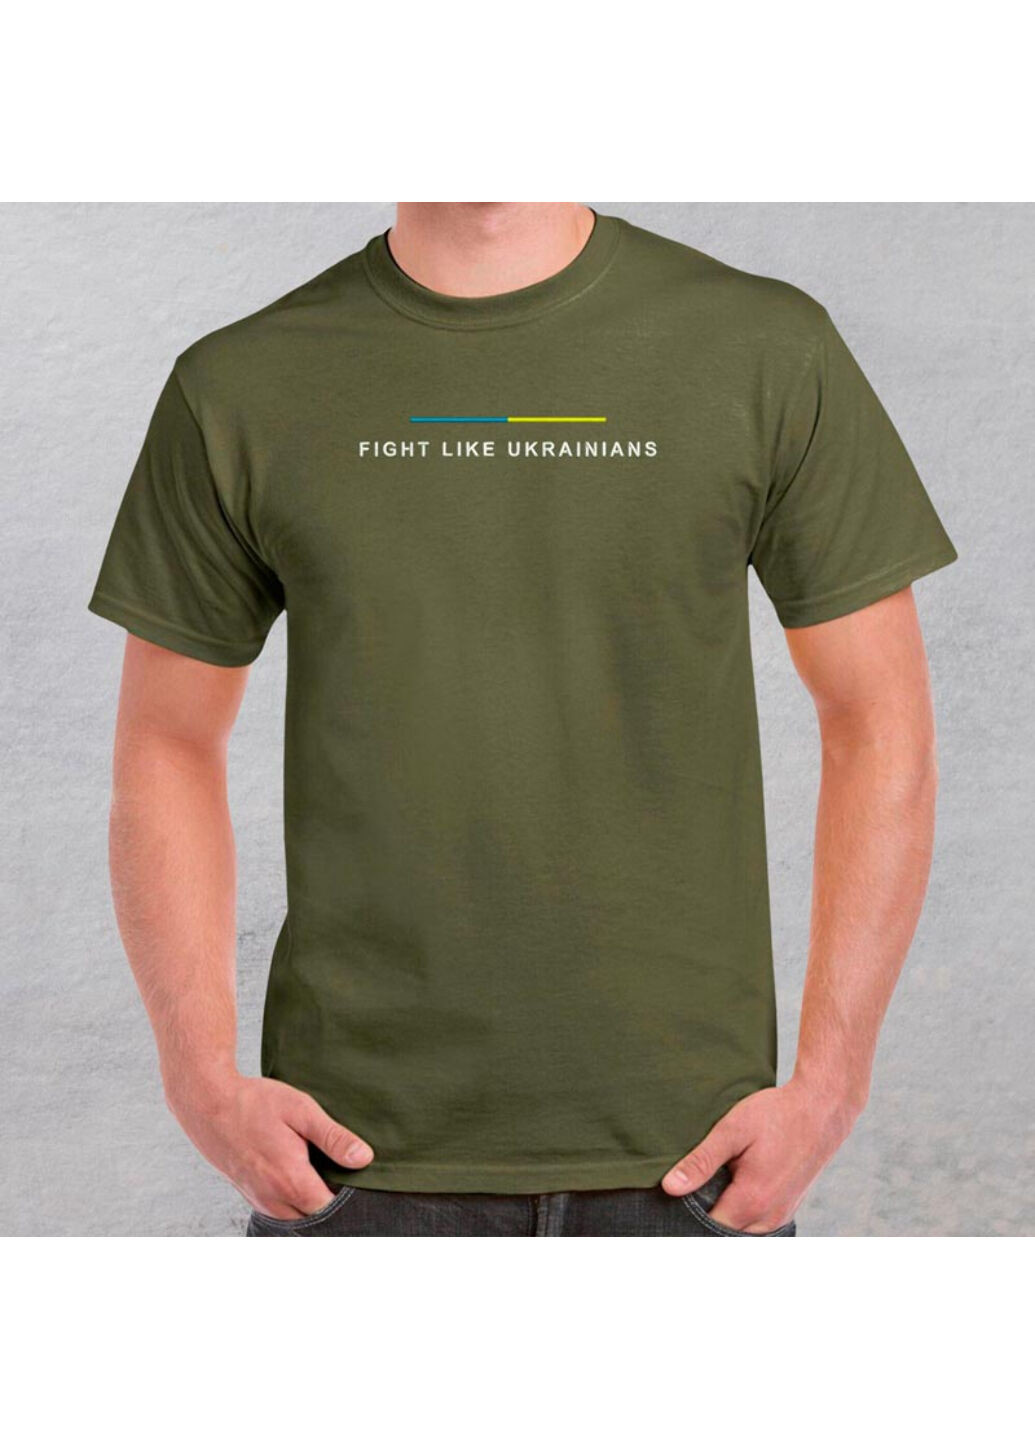 Хаки (оливковая) футболка з вишивкою fight like ukranians 01-1 мужская хаки l No Brand